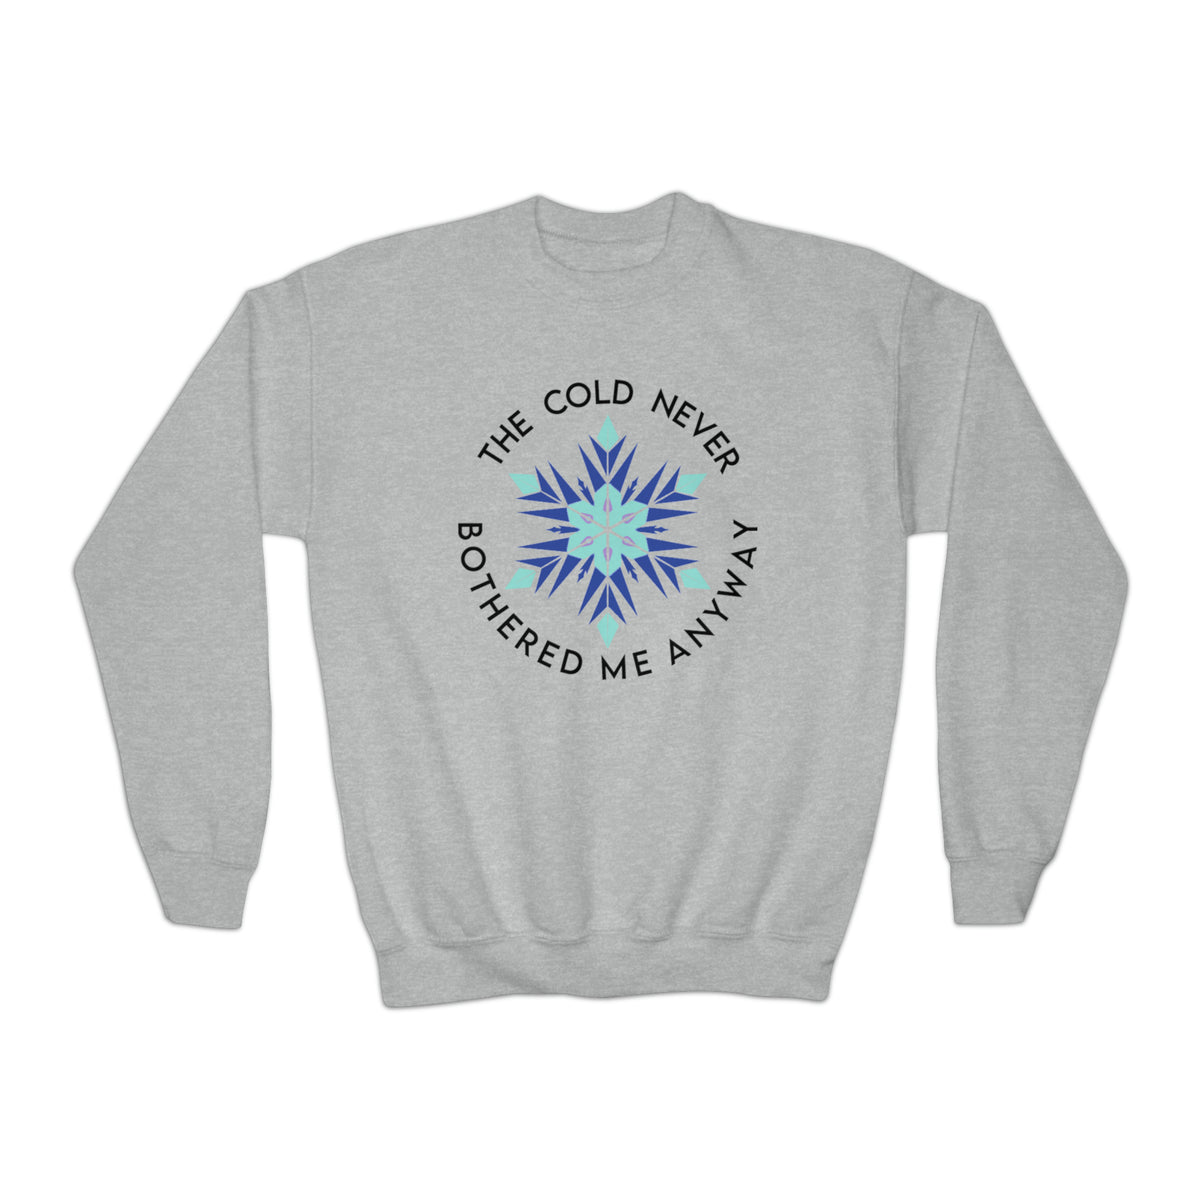 The Cold Never Bothered Me Anyway Gildan Youth Crewneck Sweatshirt